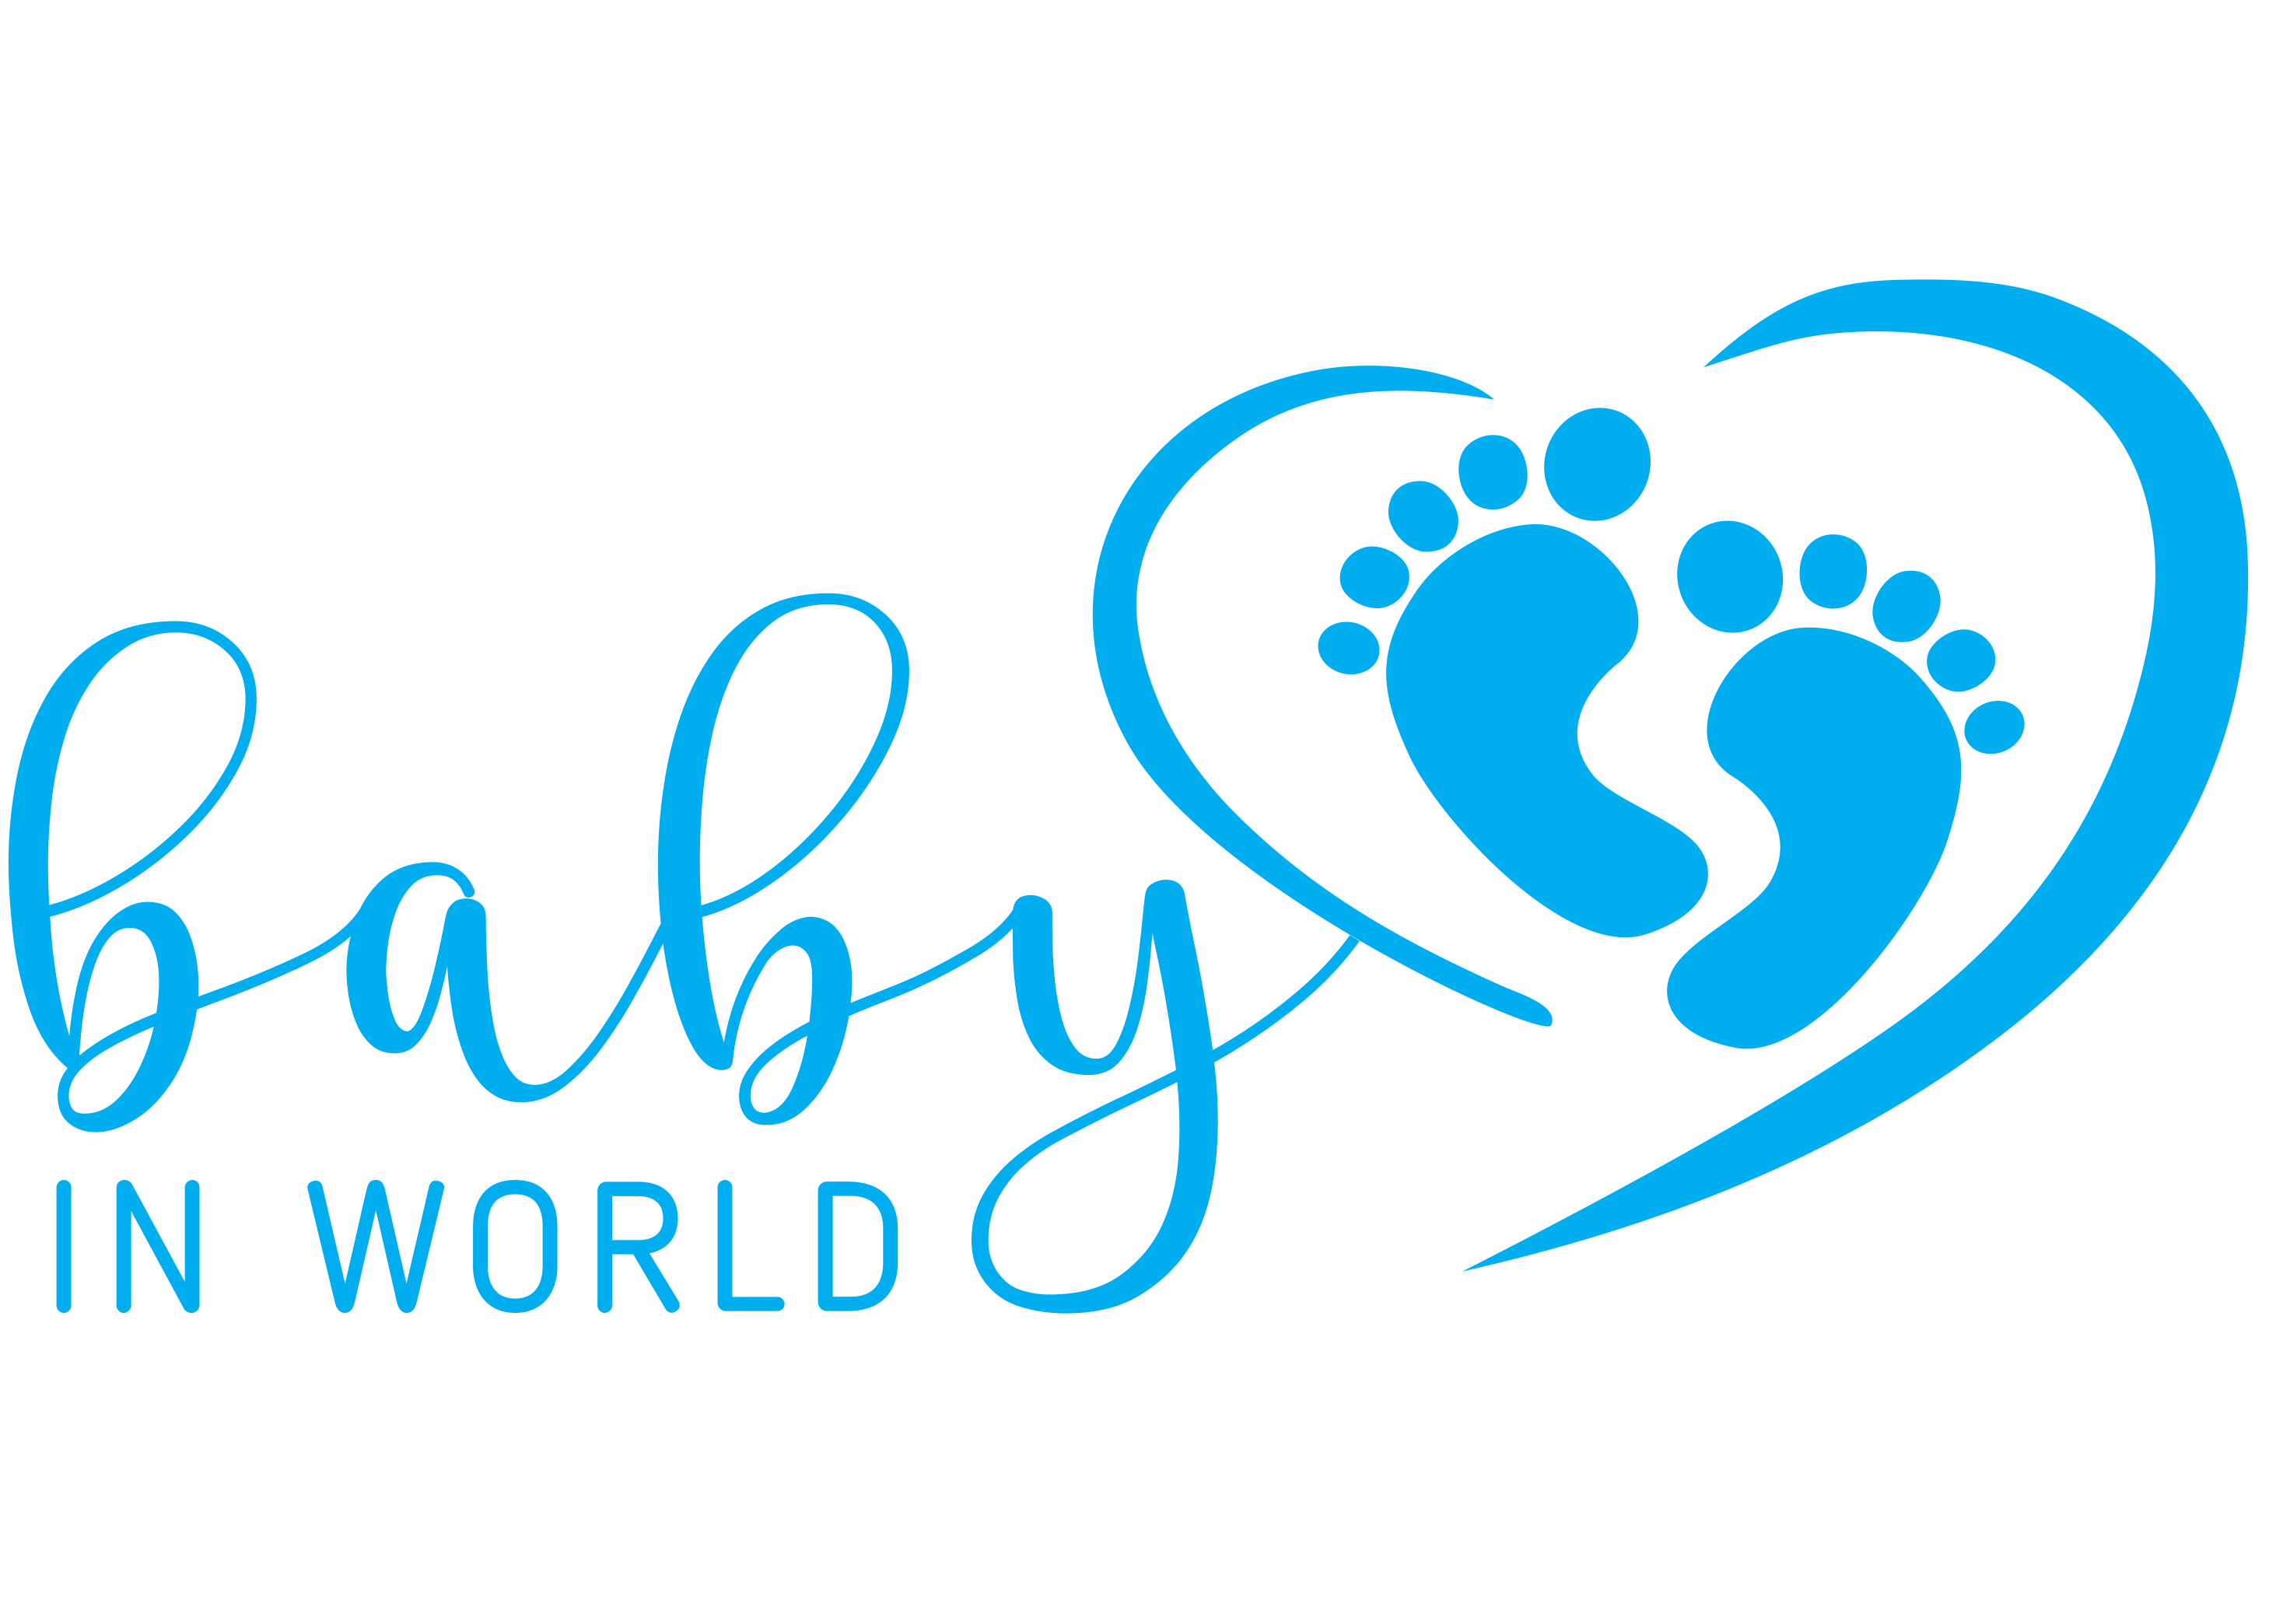 Medica - Baby in World